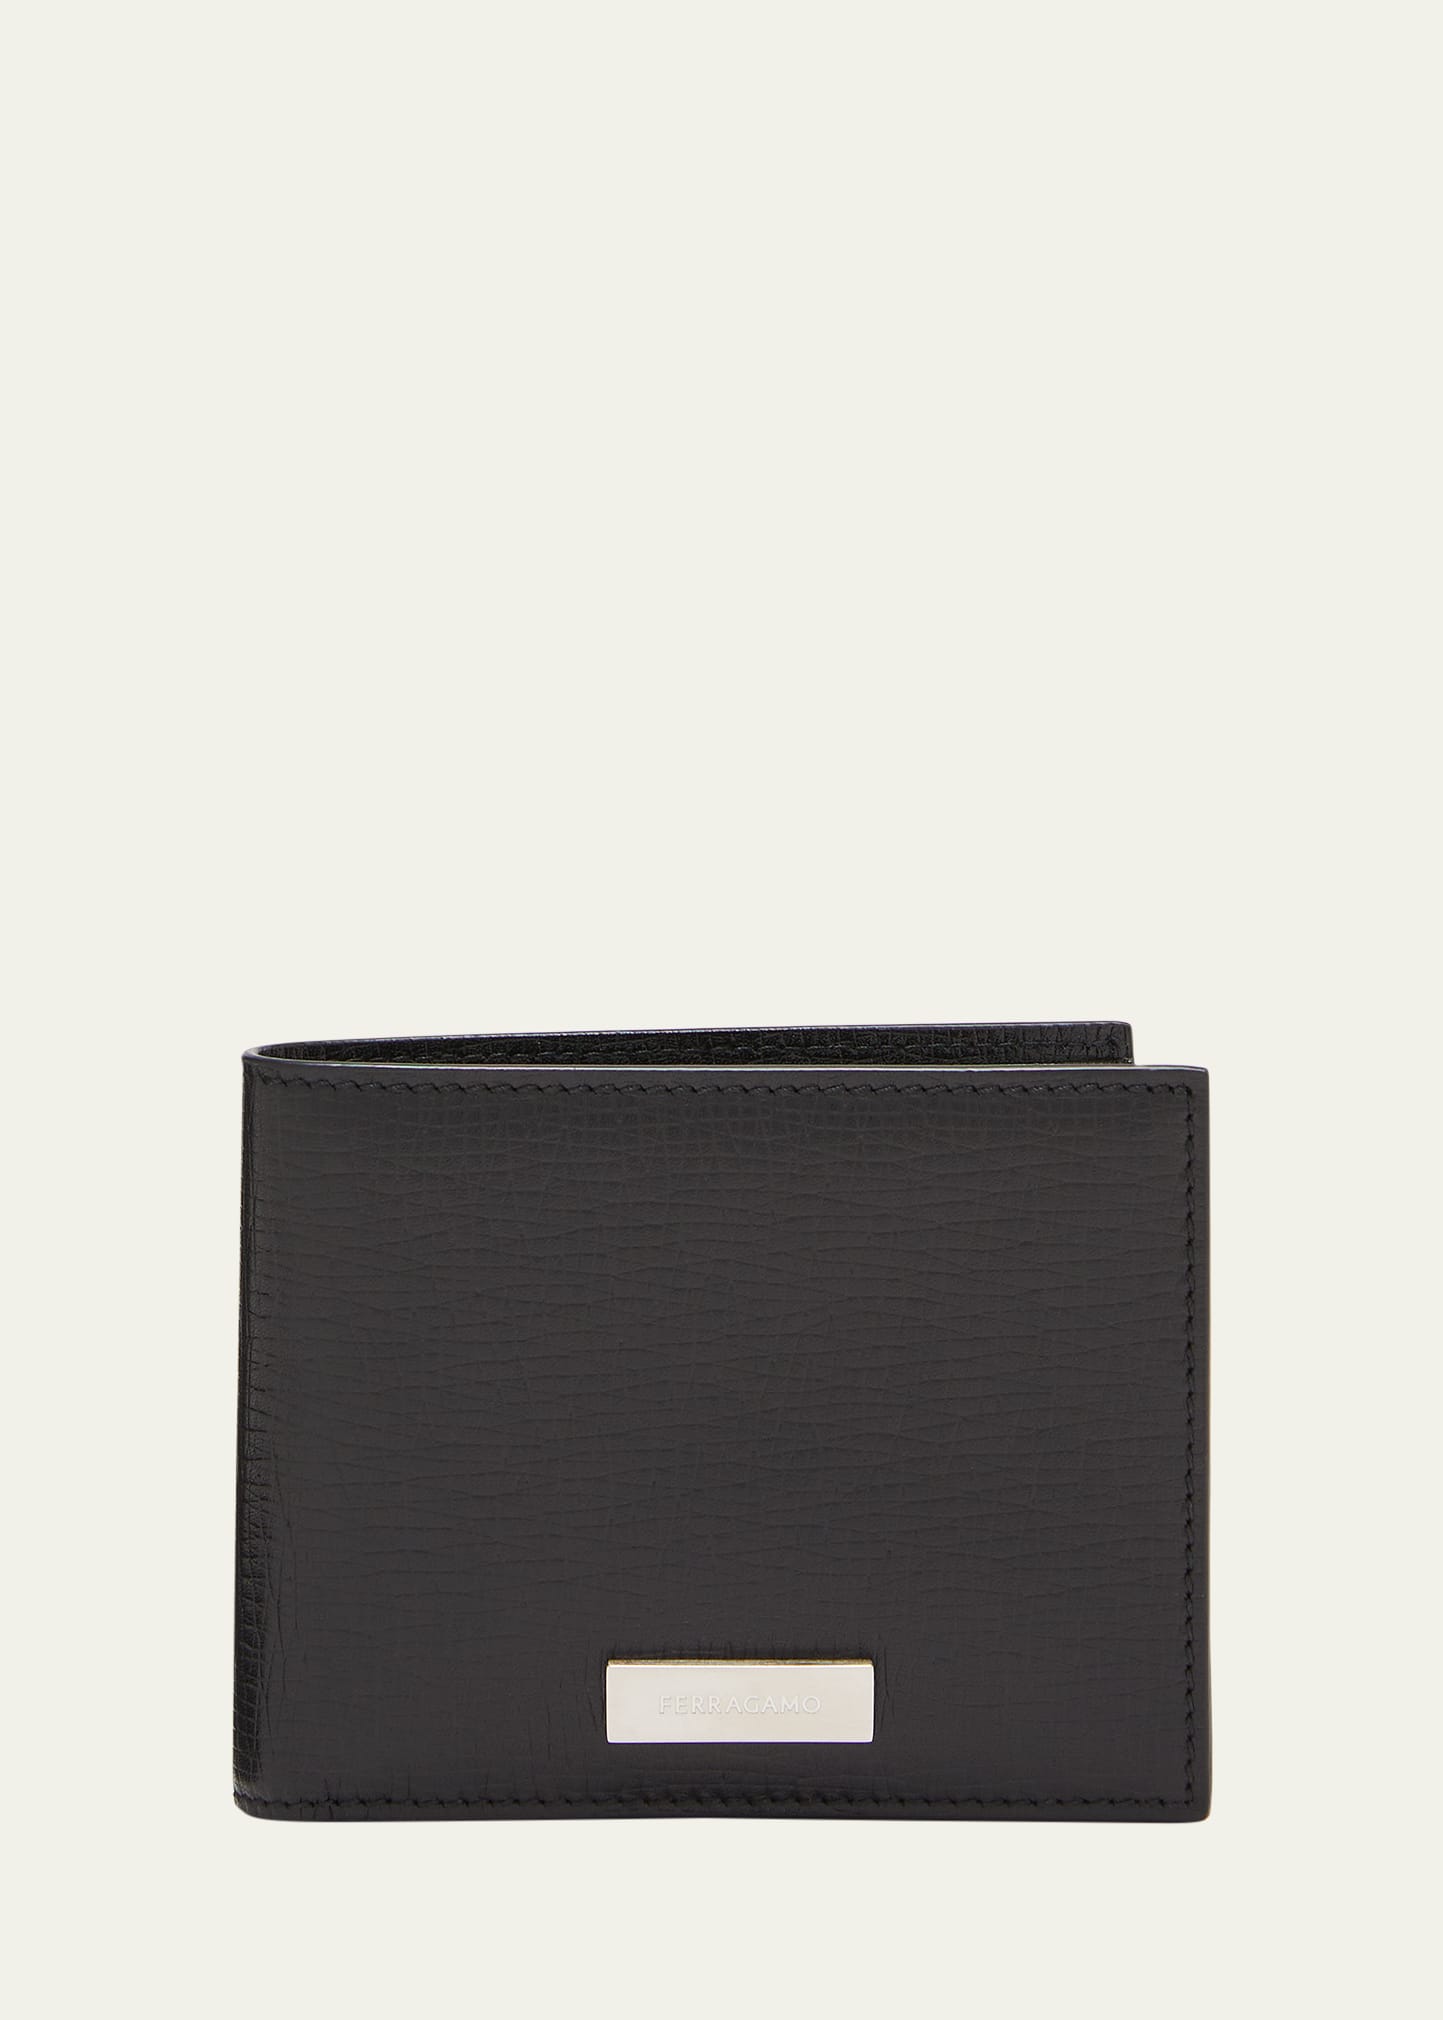 Salvatore Ferragamo Leather Revival Wallet